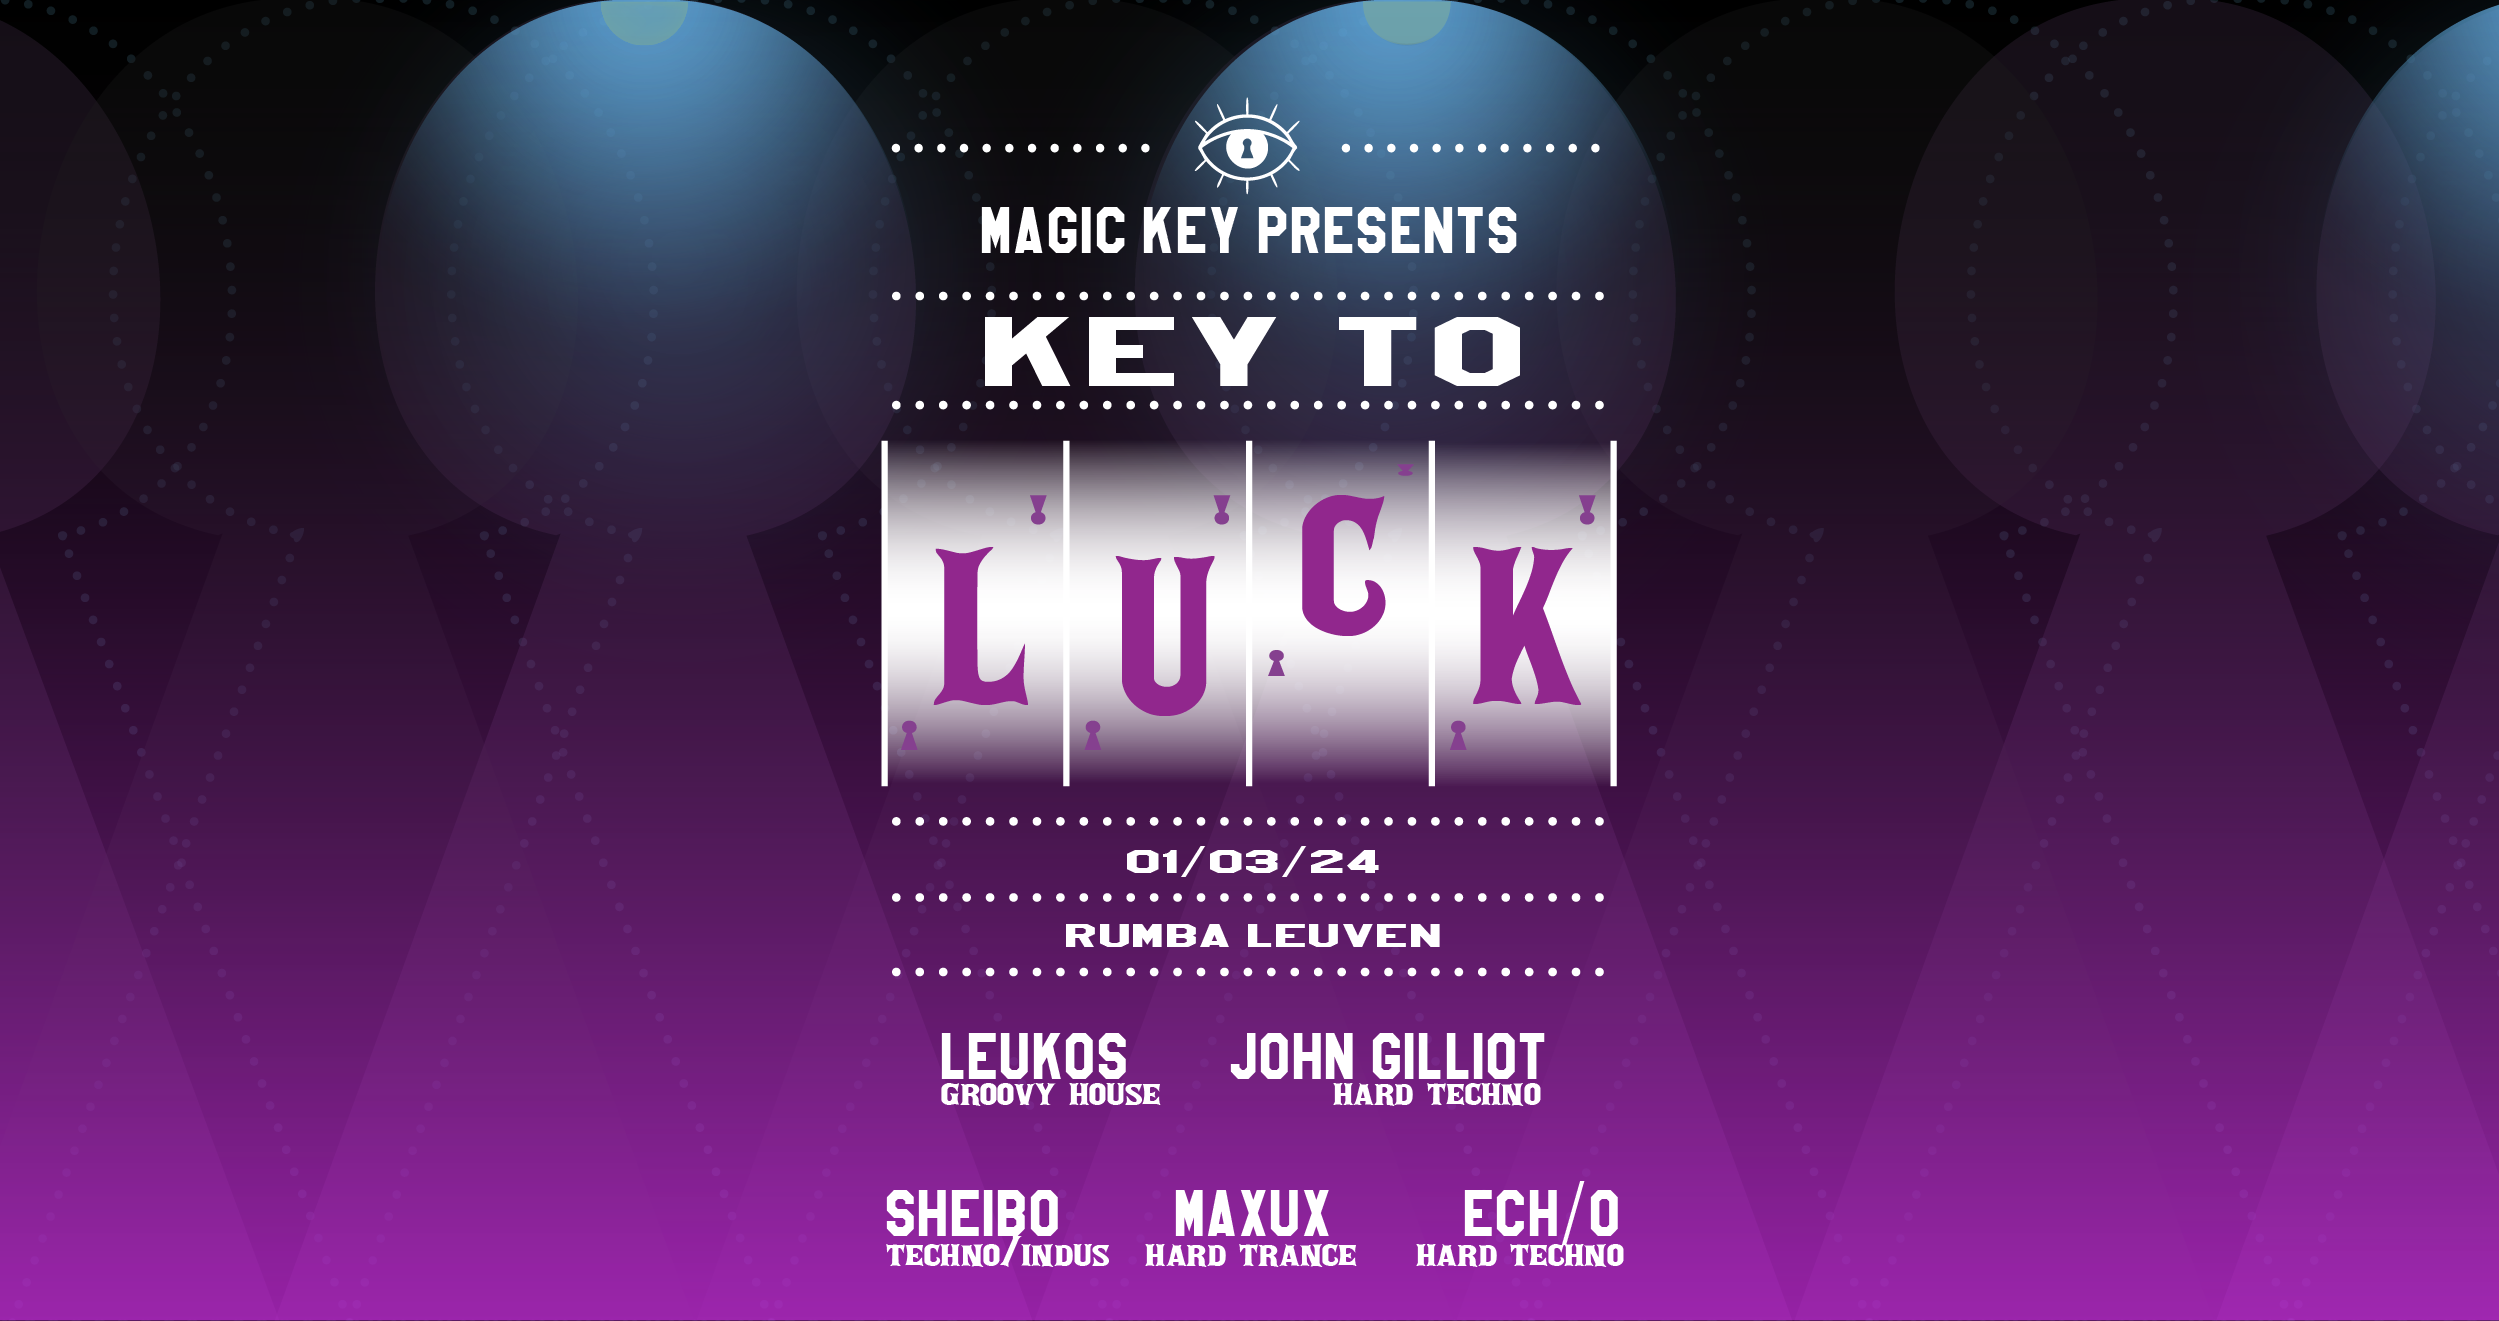 Magic Key presents: KEY TO LUCK - フライヤー表